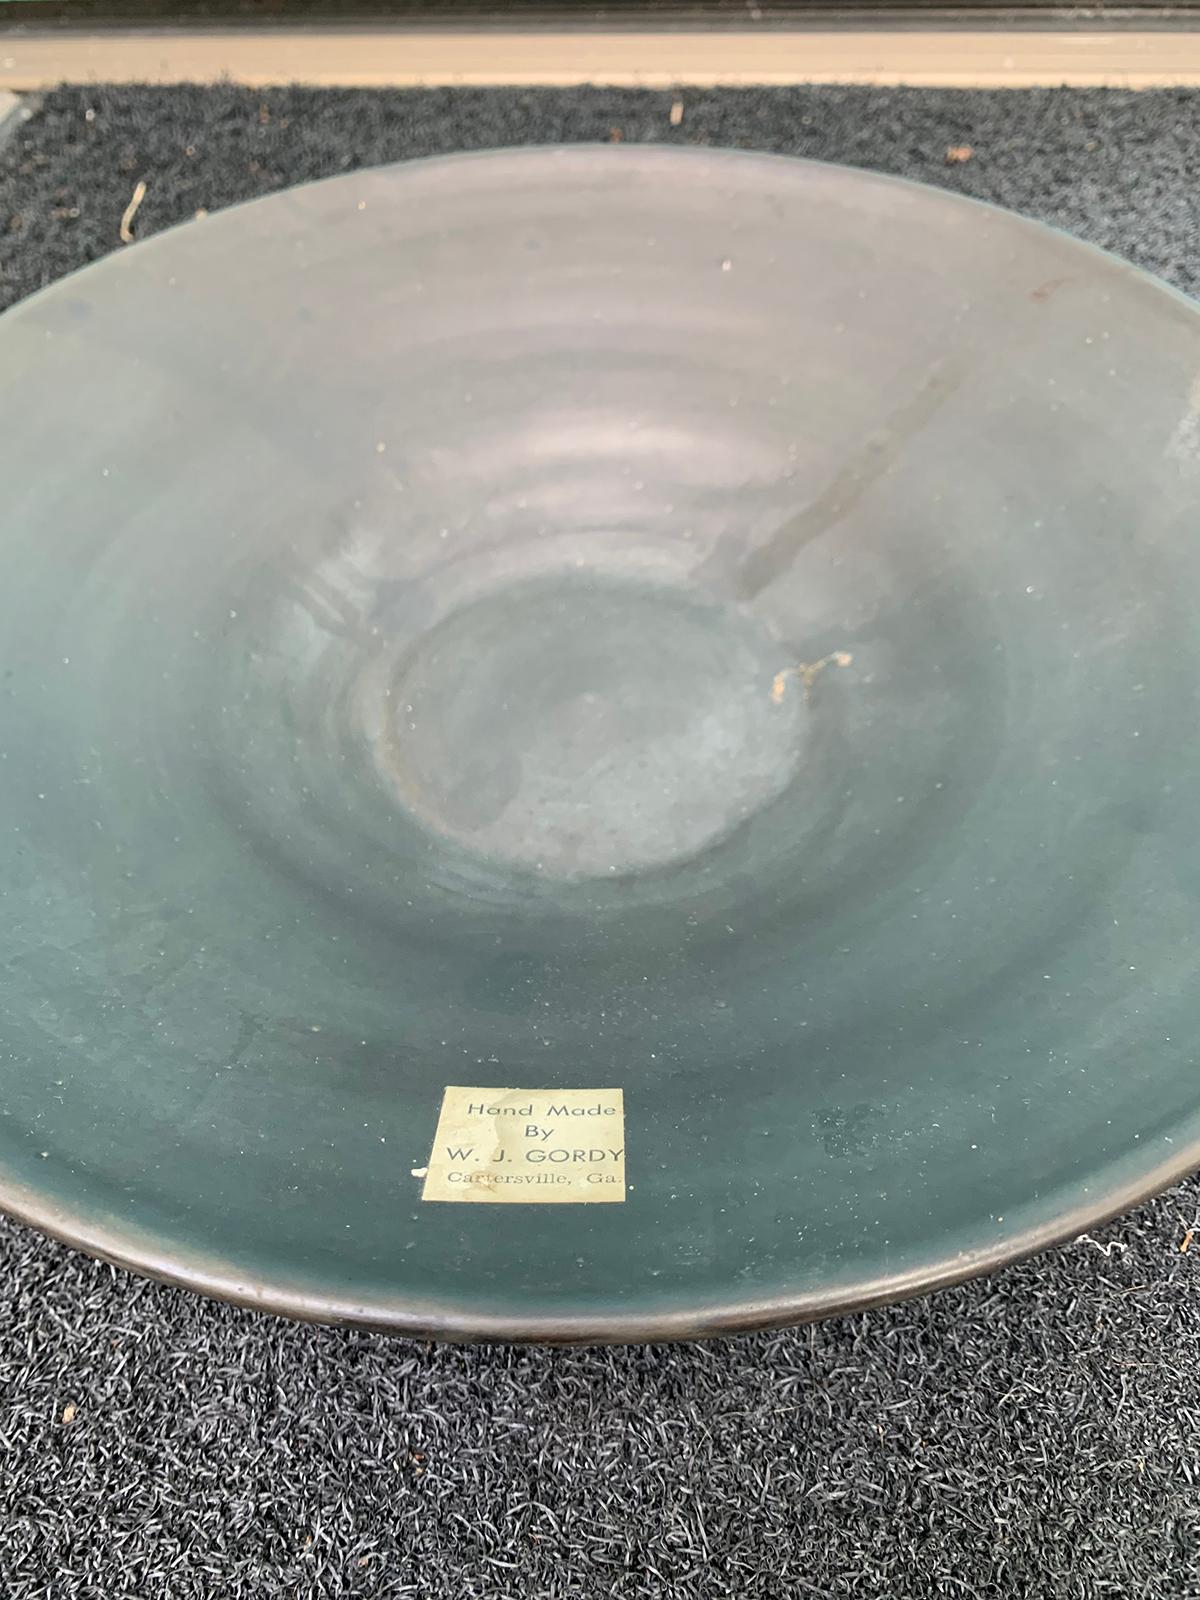 20th Century Handmade Pottery Plate by W.J. Gordy Original Label & Potter's Mark 1